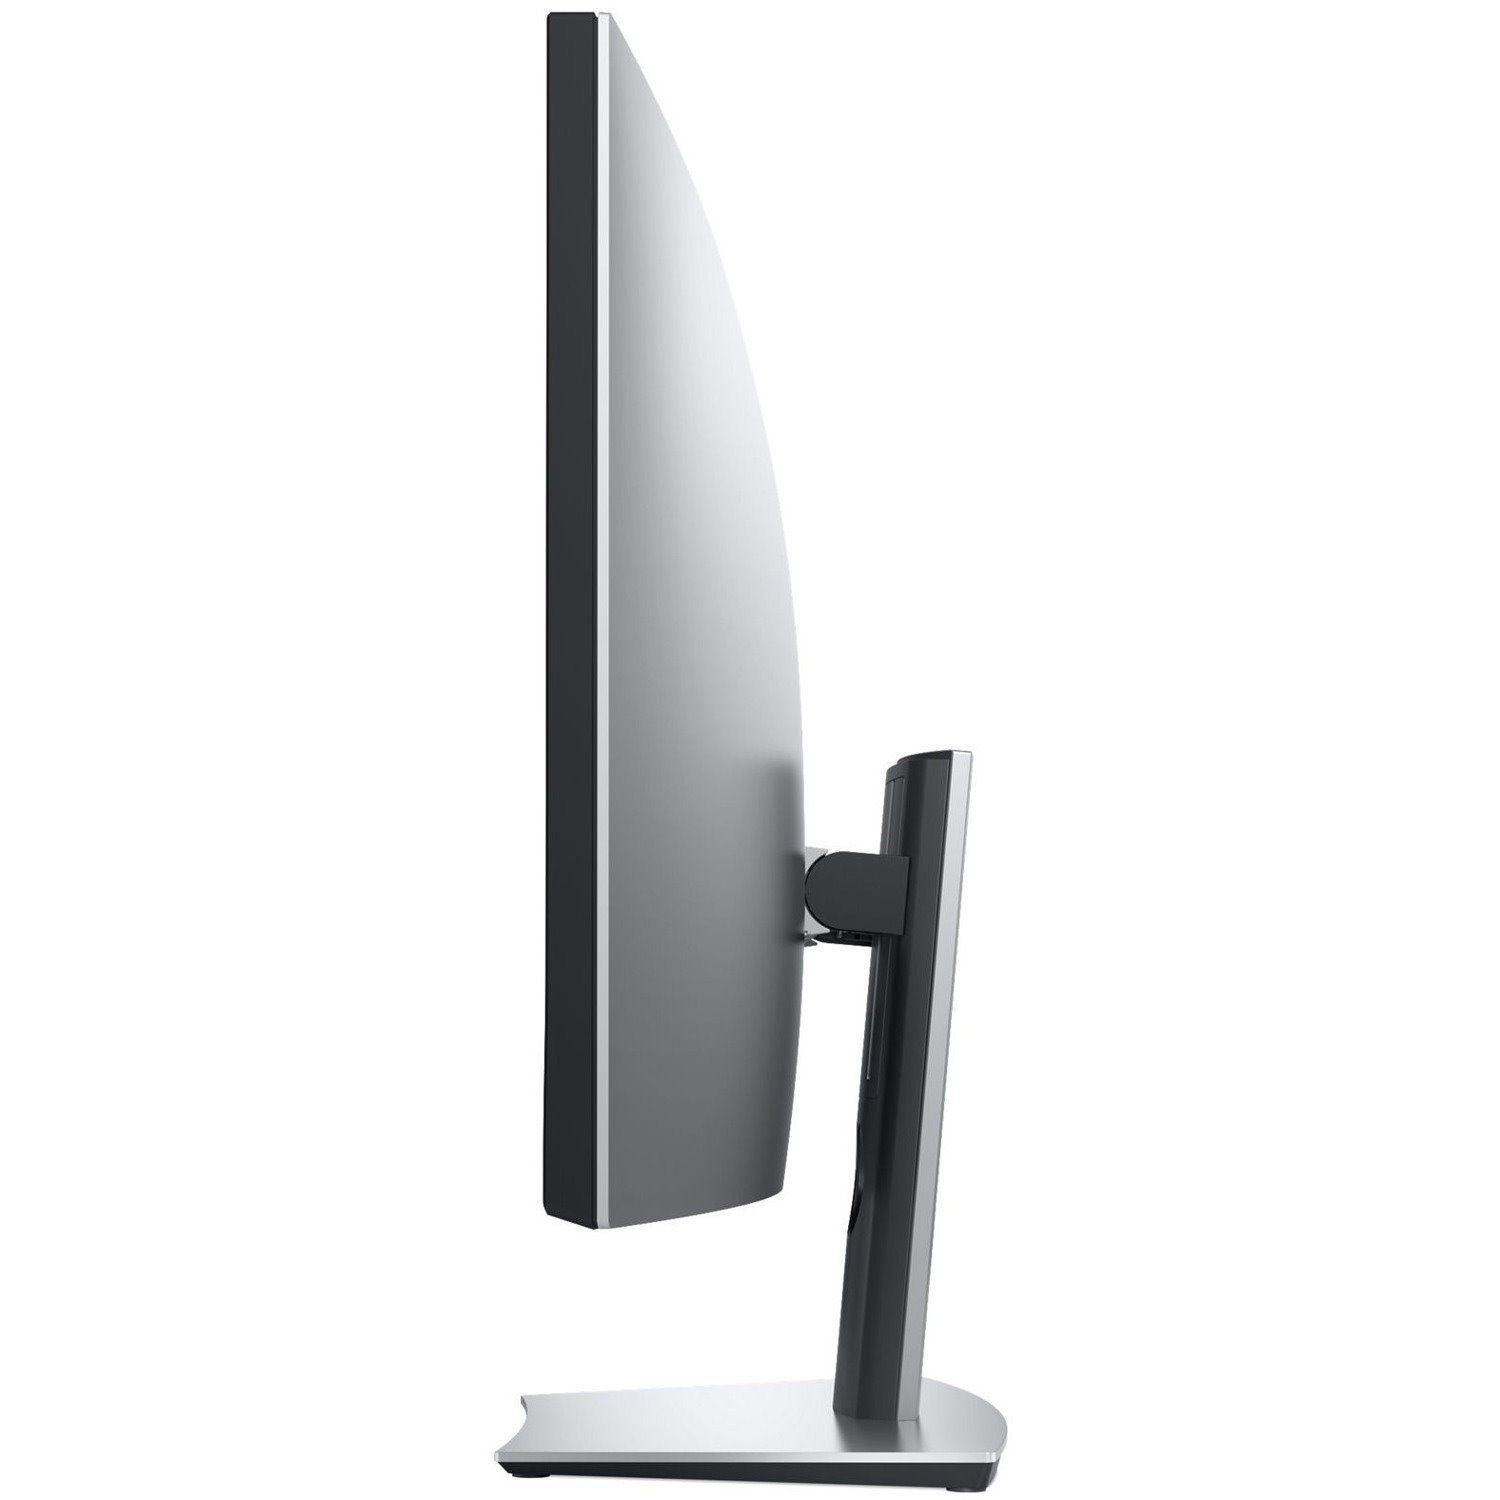 Dell UltraSharp U4919DW 49" Class Dual Quad HD (DQHD) Curved Screen LCD Monitor - 32:9 - Black, Gray